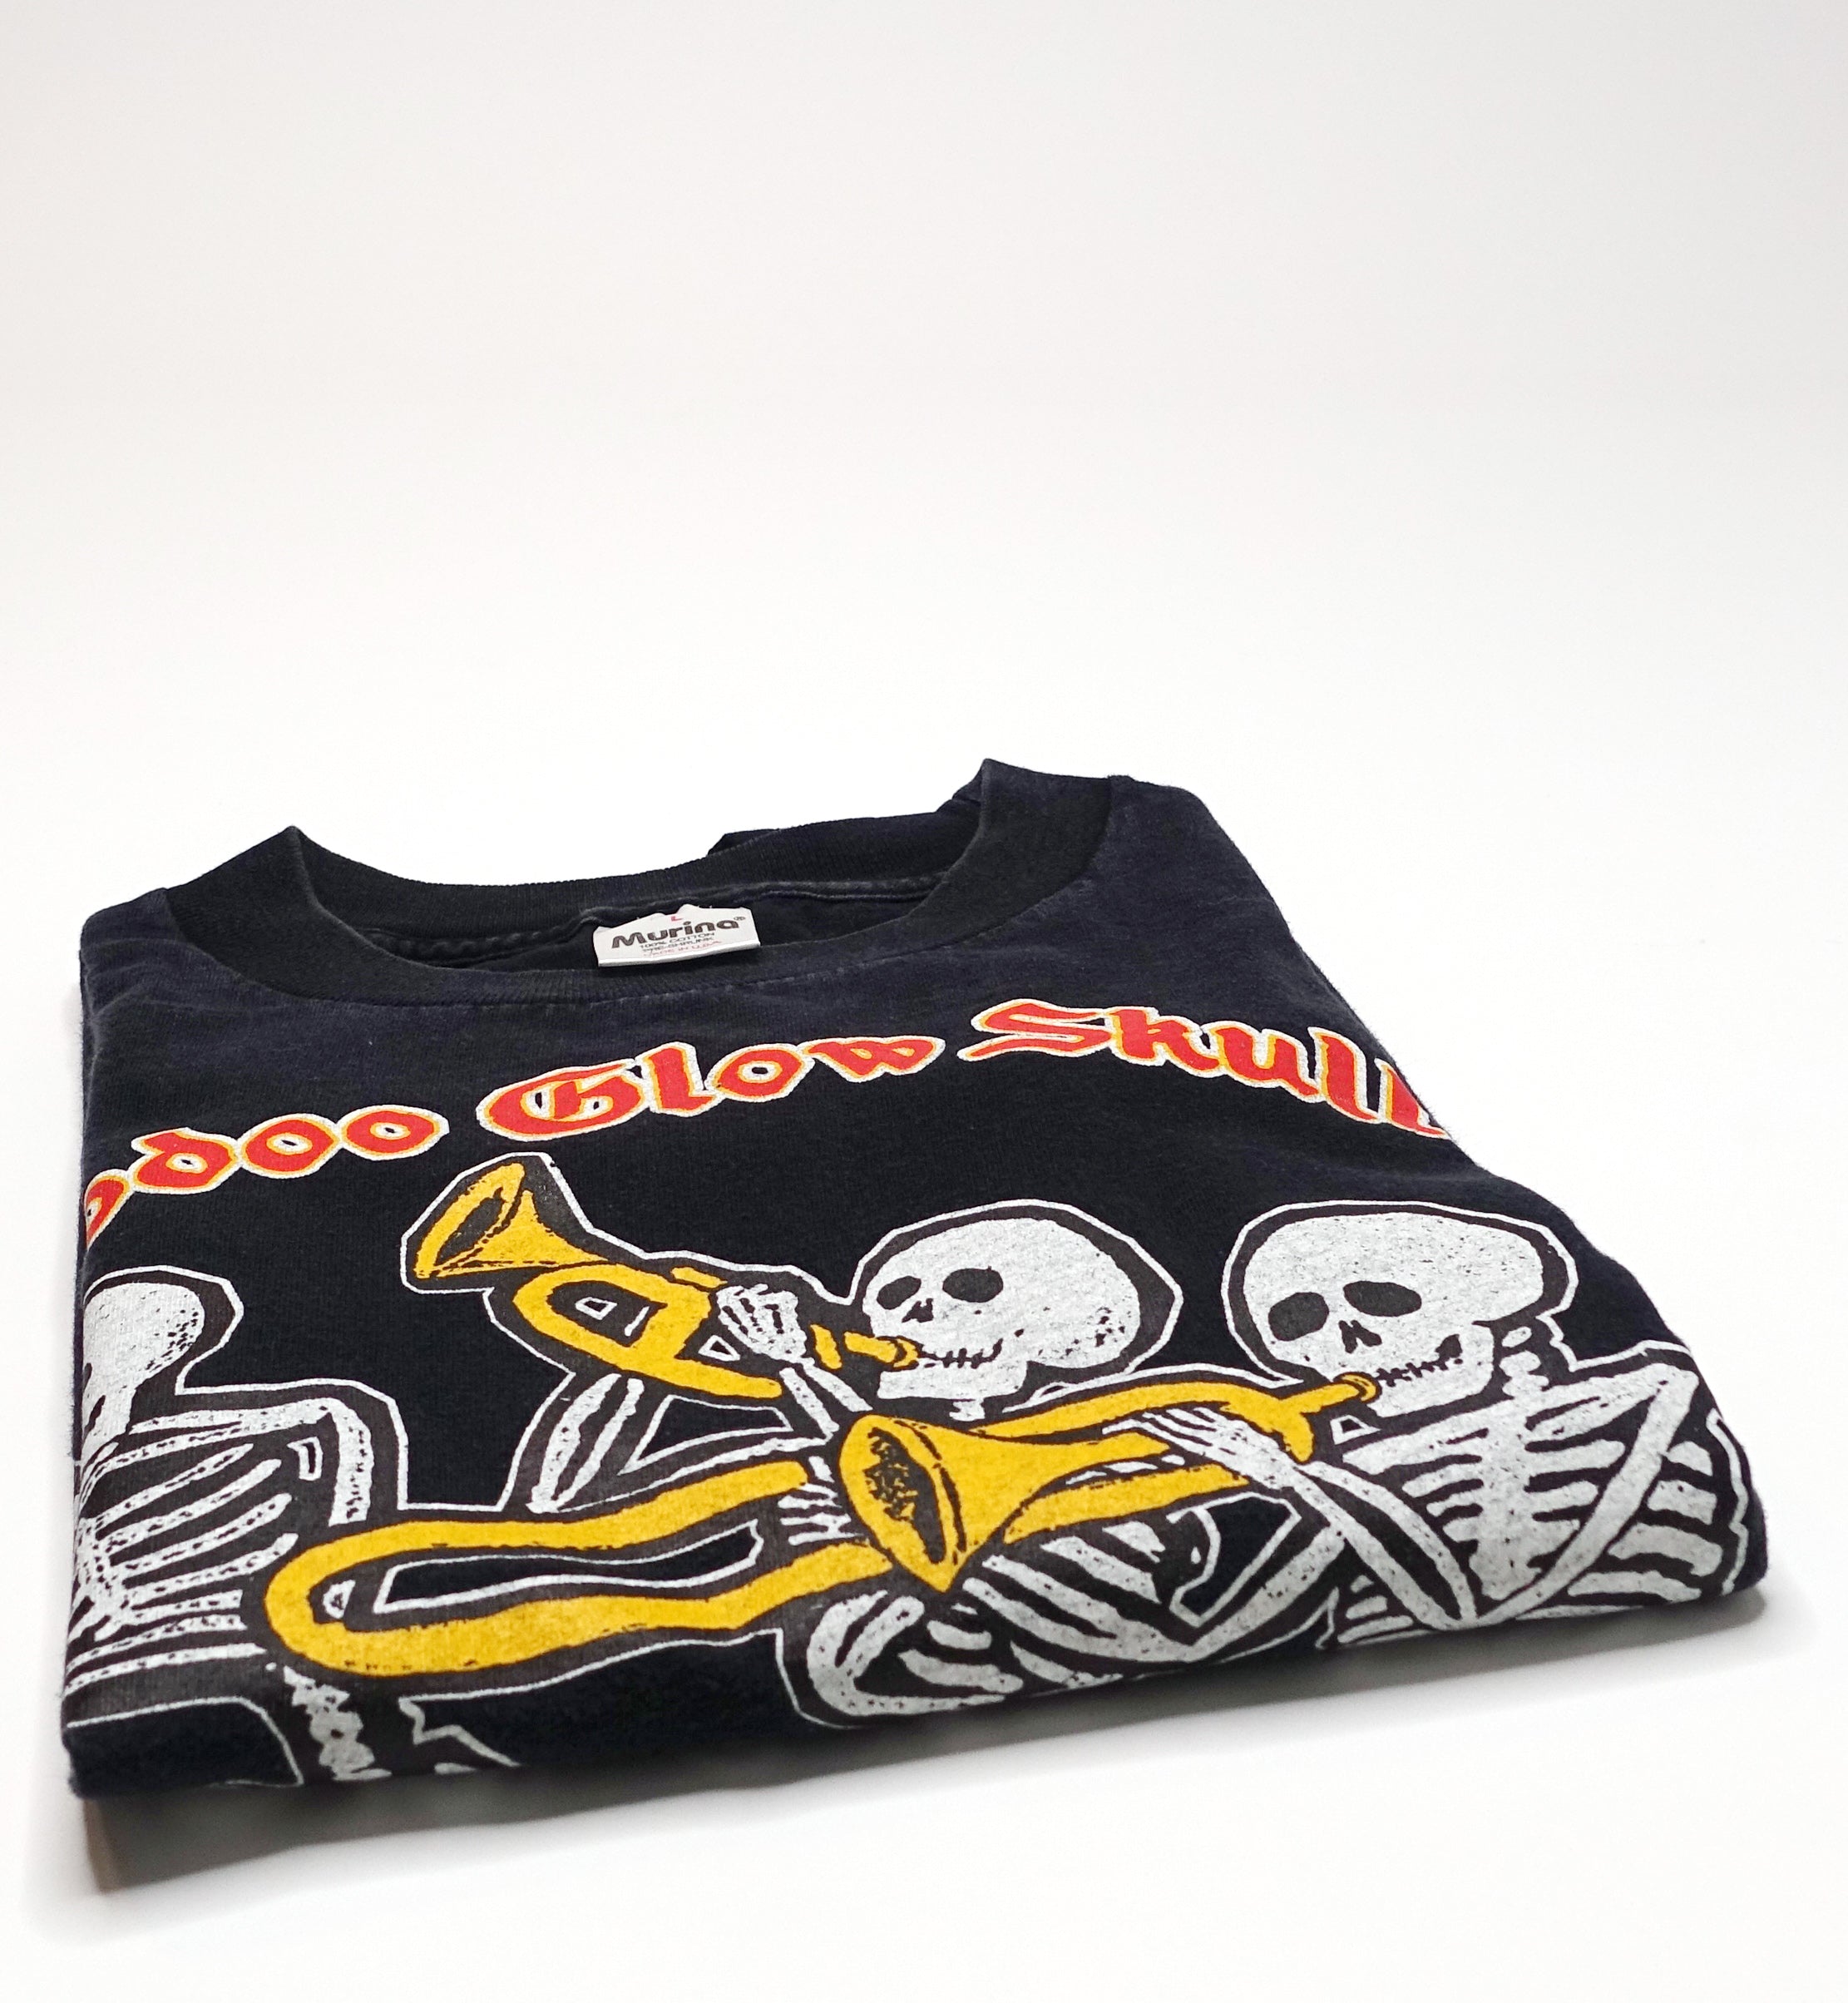 Voodoo Glow Skulls – Firme 1995 Tour Long Sleeve Shirt Size Large